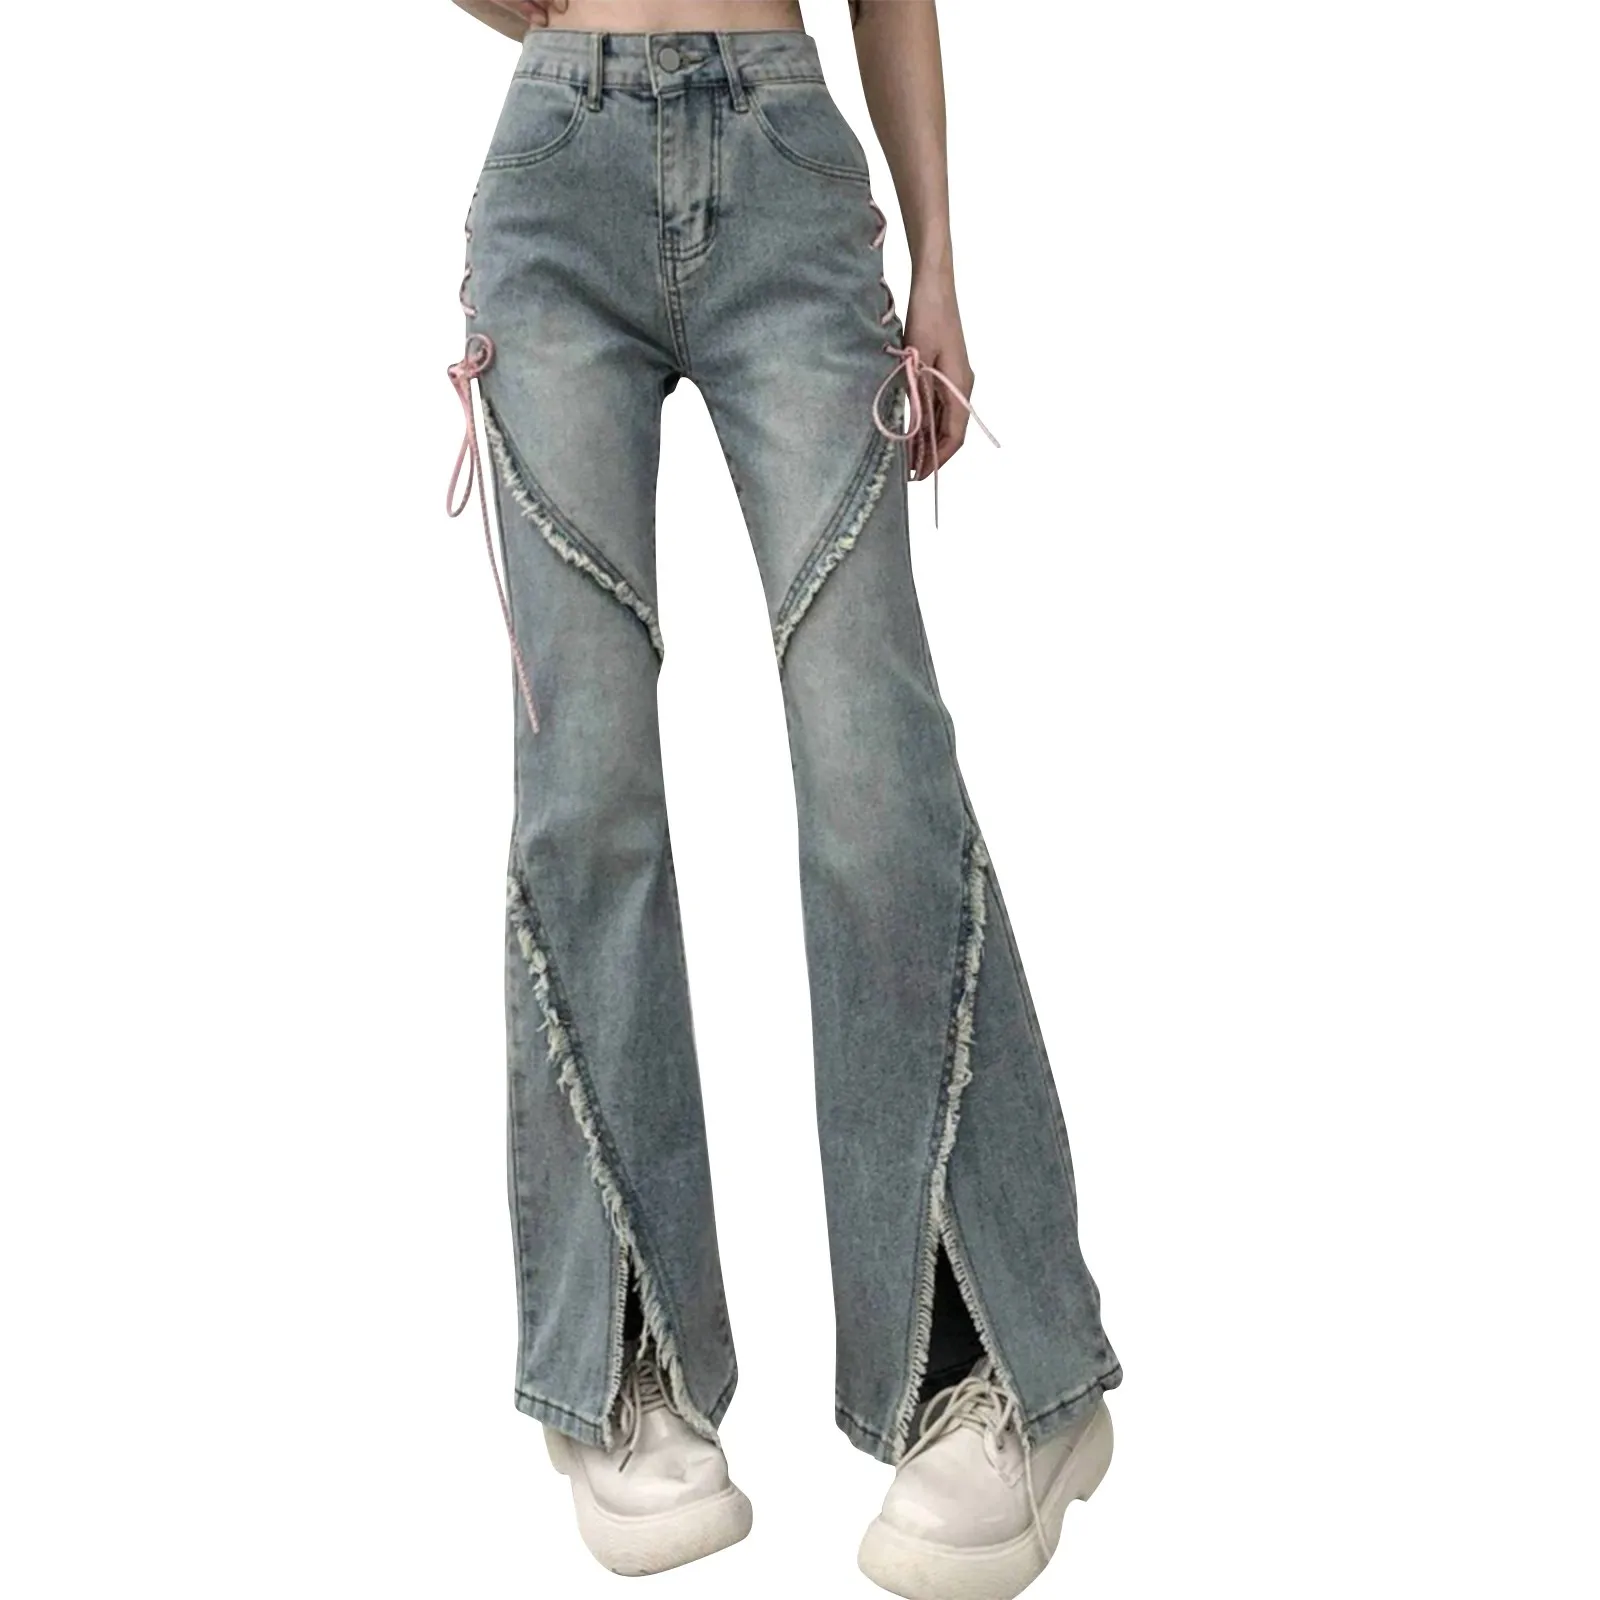 Fashion Women Slim Jeans Straight High Waist Casual Trousers брюки женские ensembles pantalons pantalones de mujer 여성가을옷 0